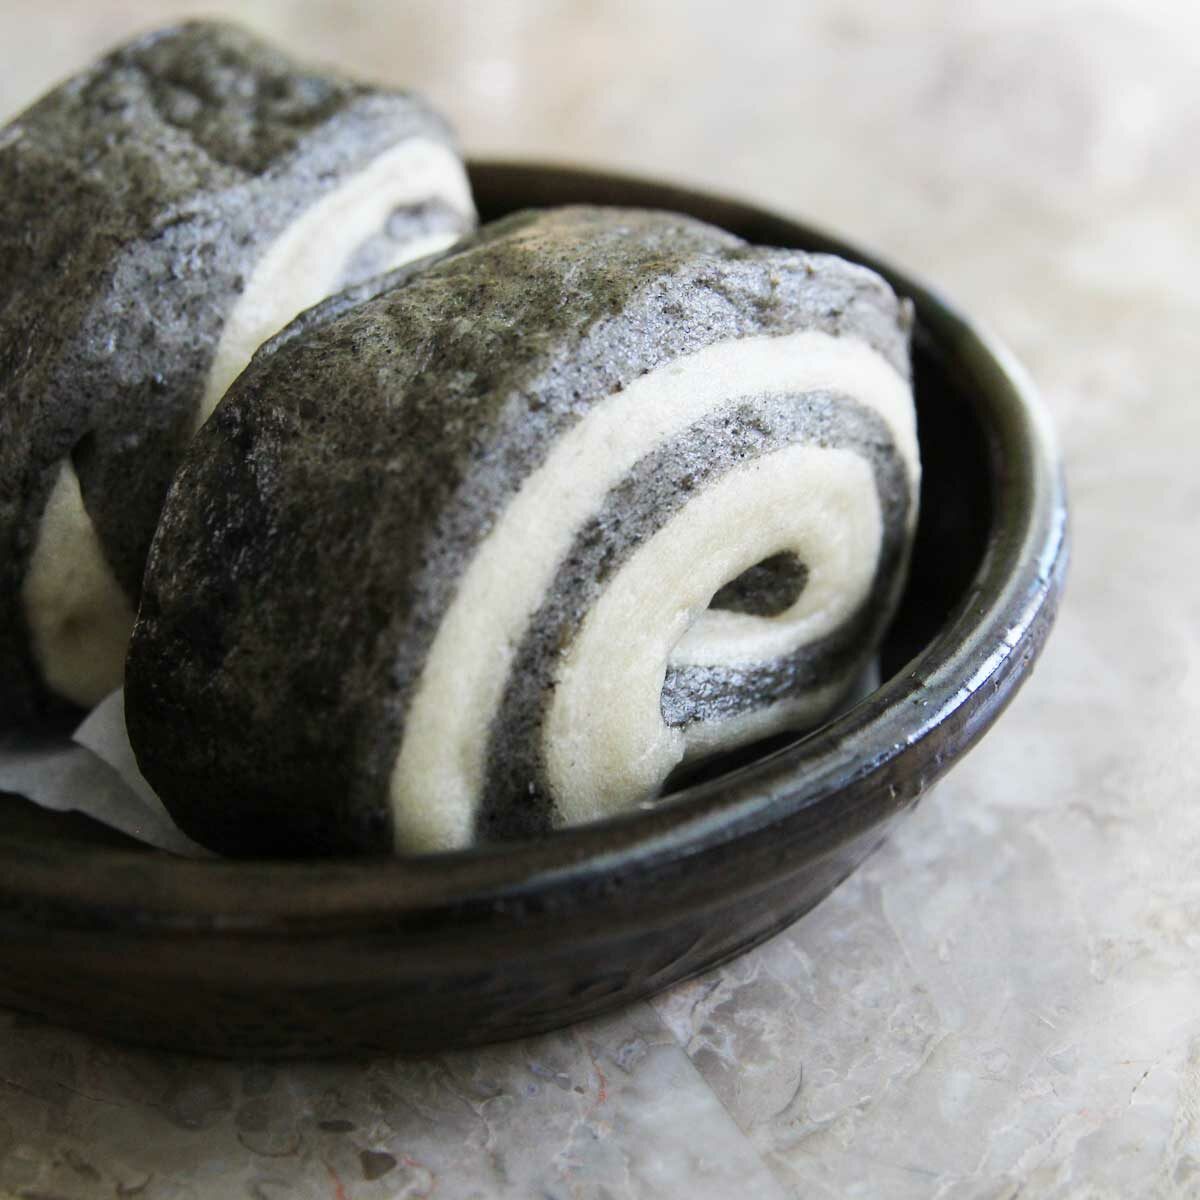 Homemade Black Sesame & Almond Milk Spiral Mantou (Vegan Steamed Buns Recipe) - Black Sesame & Almond Milk Mantou